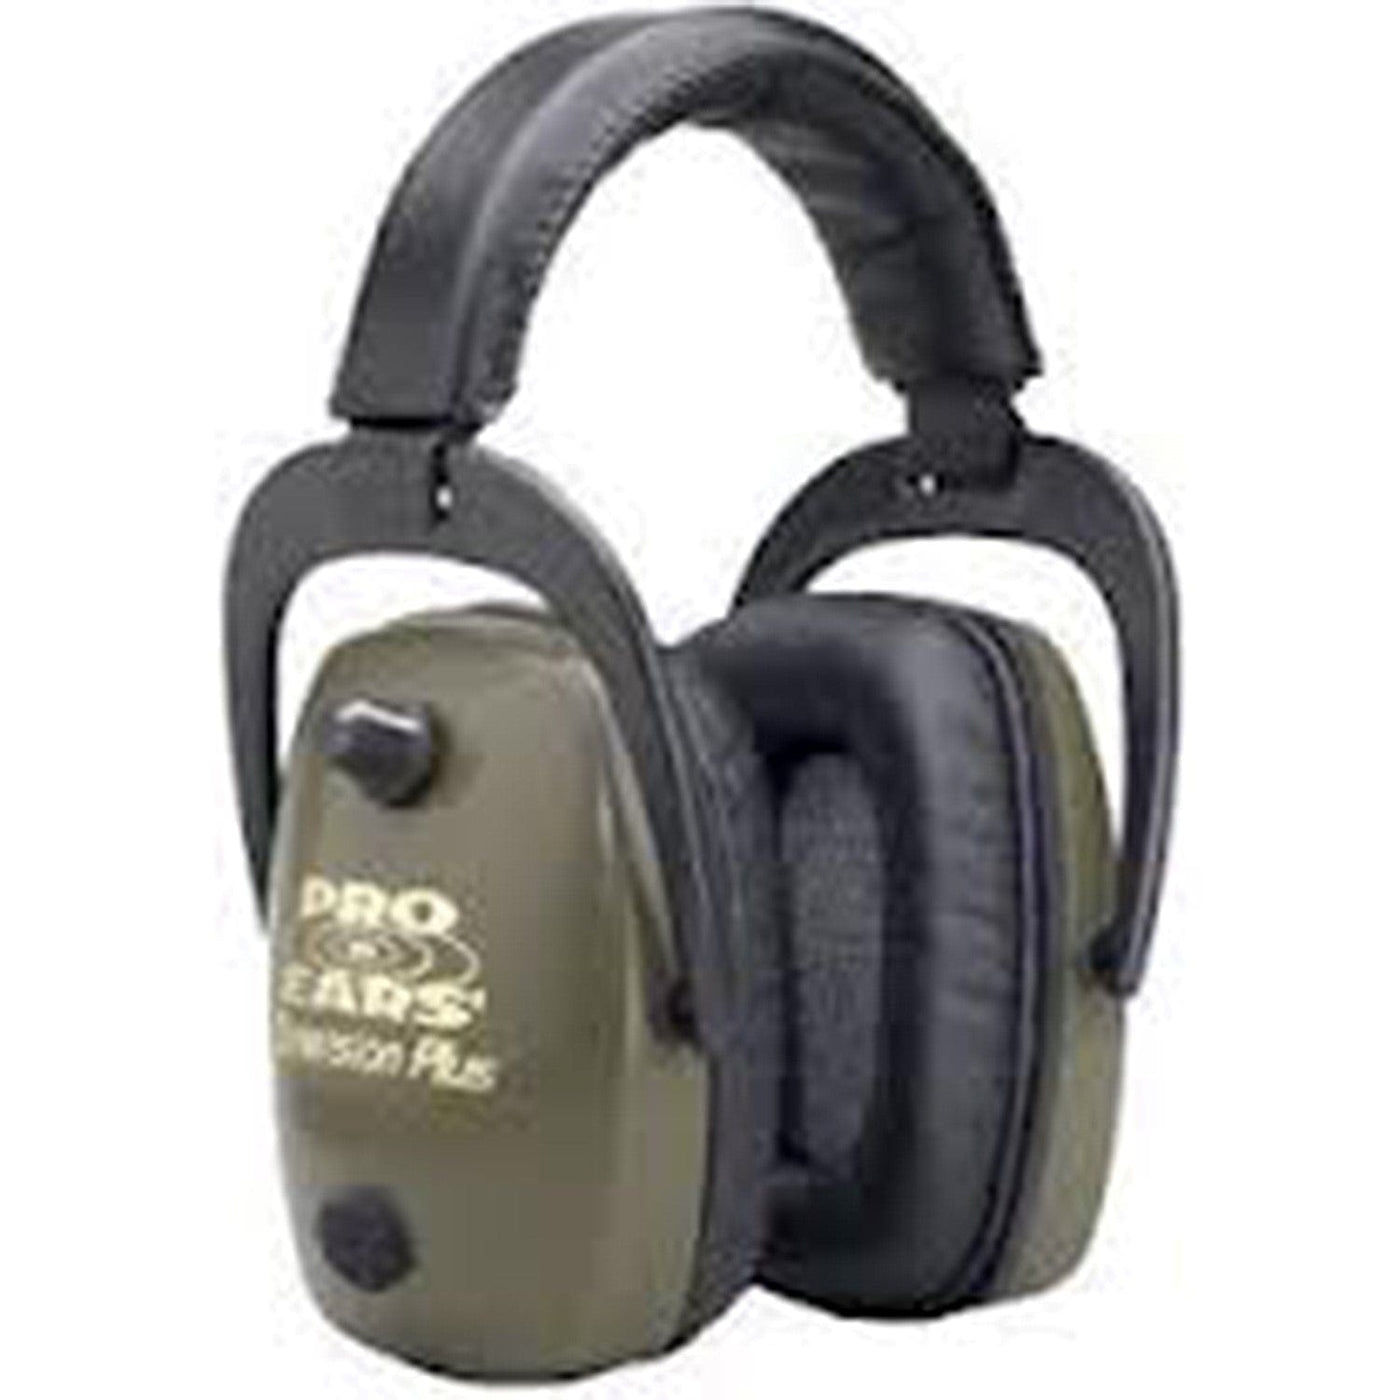 Pro Ears Pro Ears Pro Slim Gold Series Ear Muffs Green GS-DPS-G Green Shooting